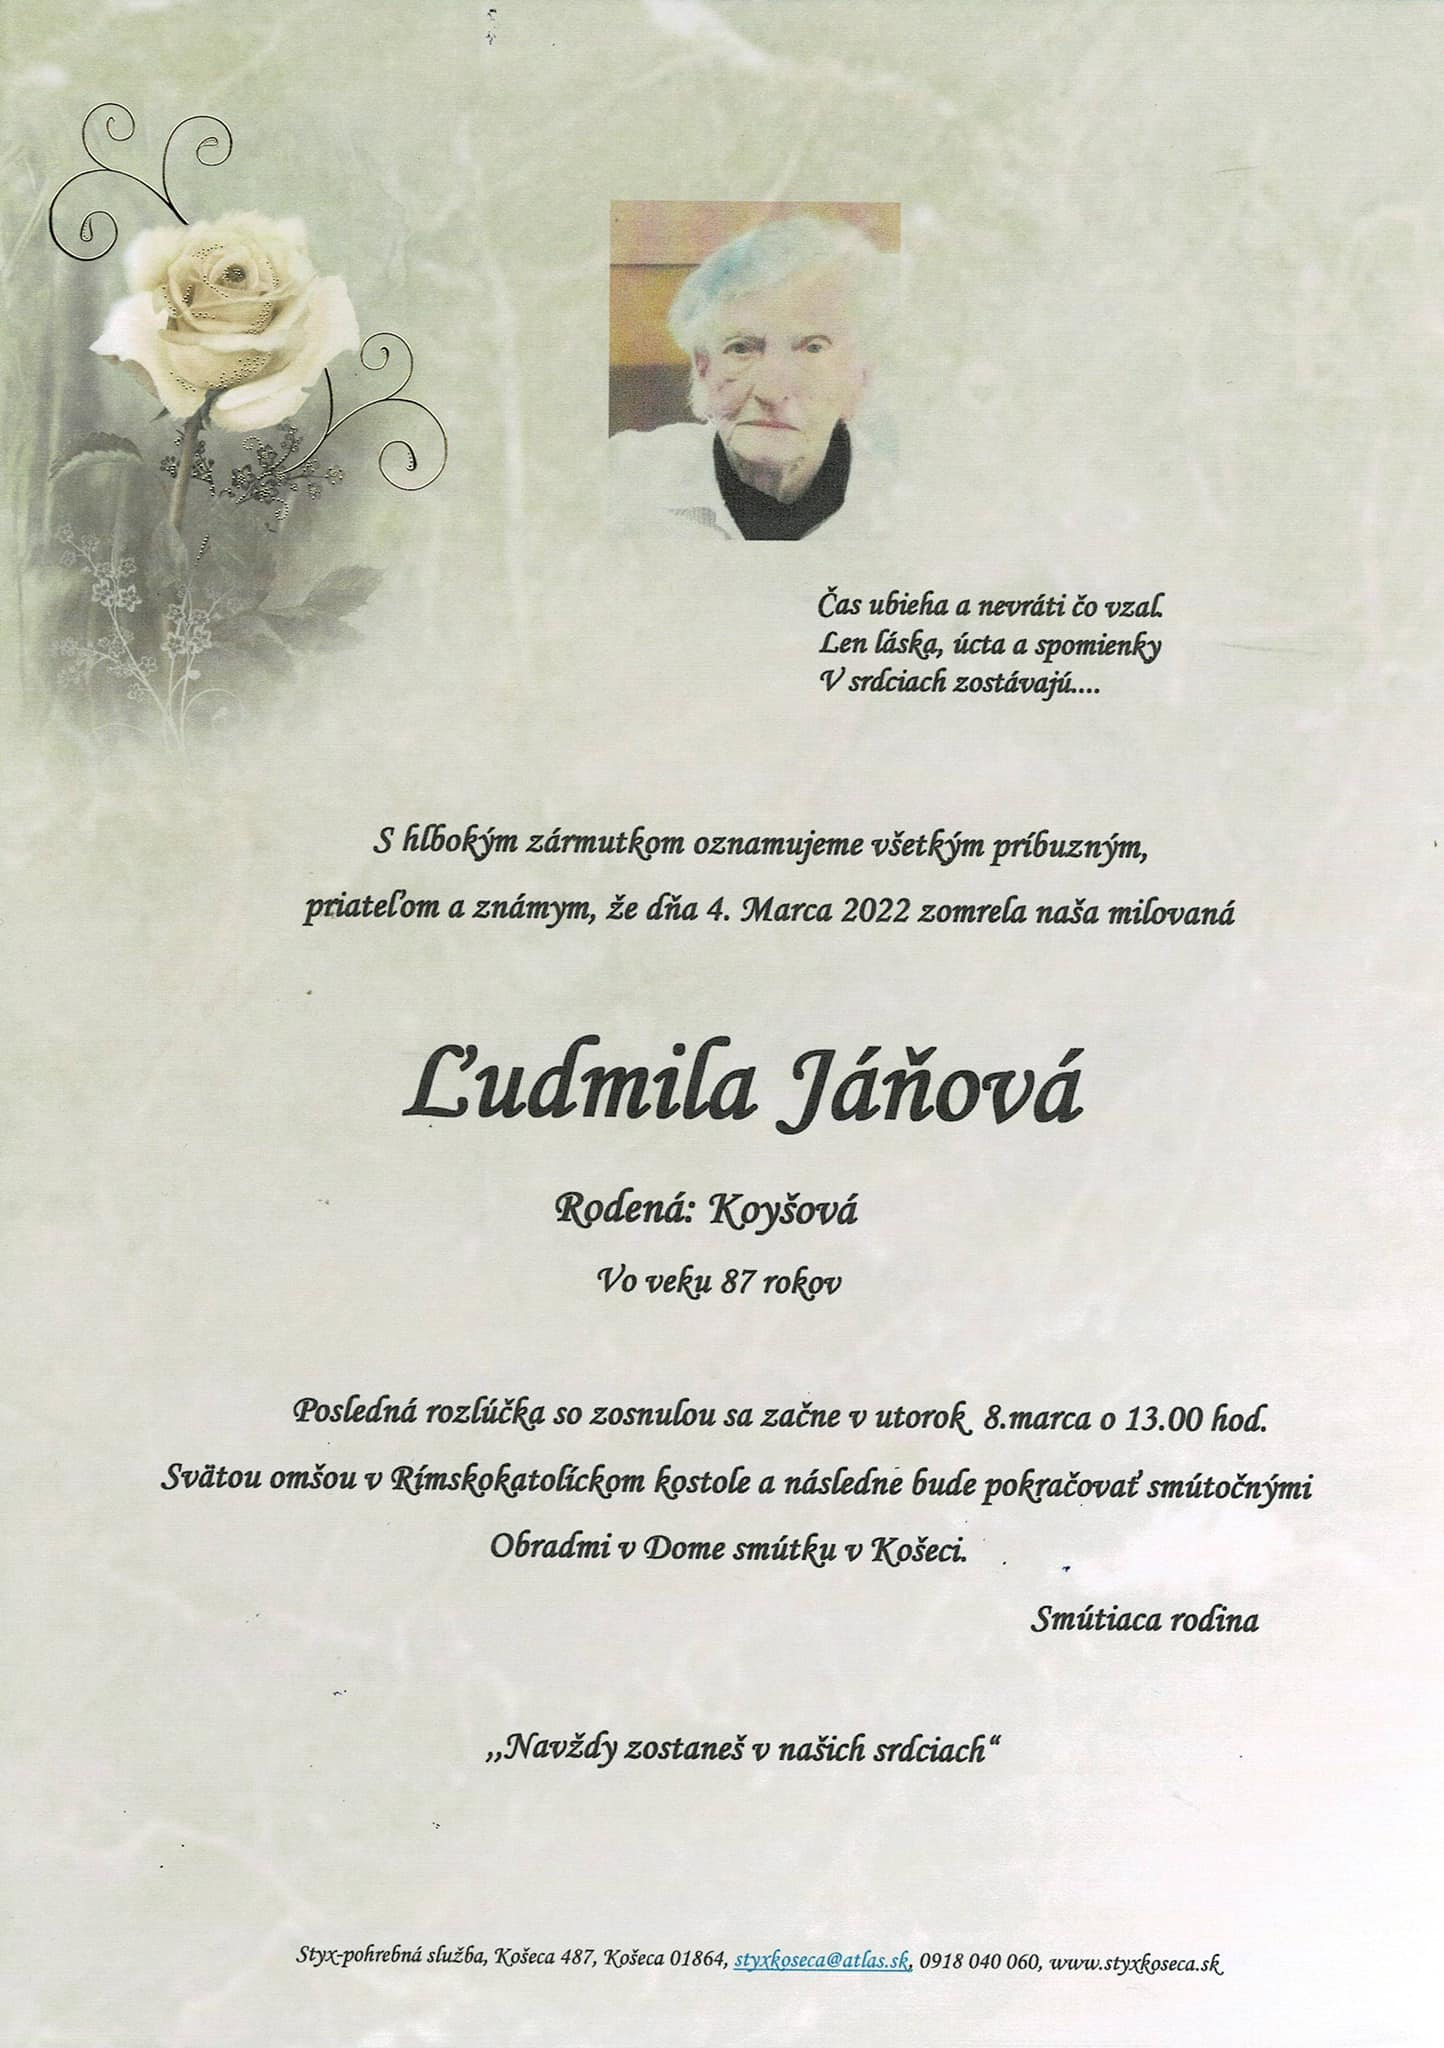 smutocne-oznamenie-ludmila-janova-rod-koysova